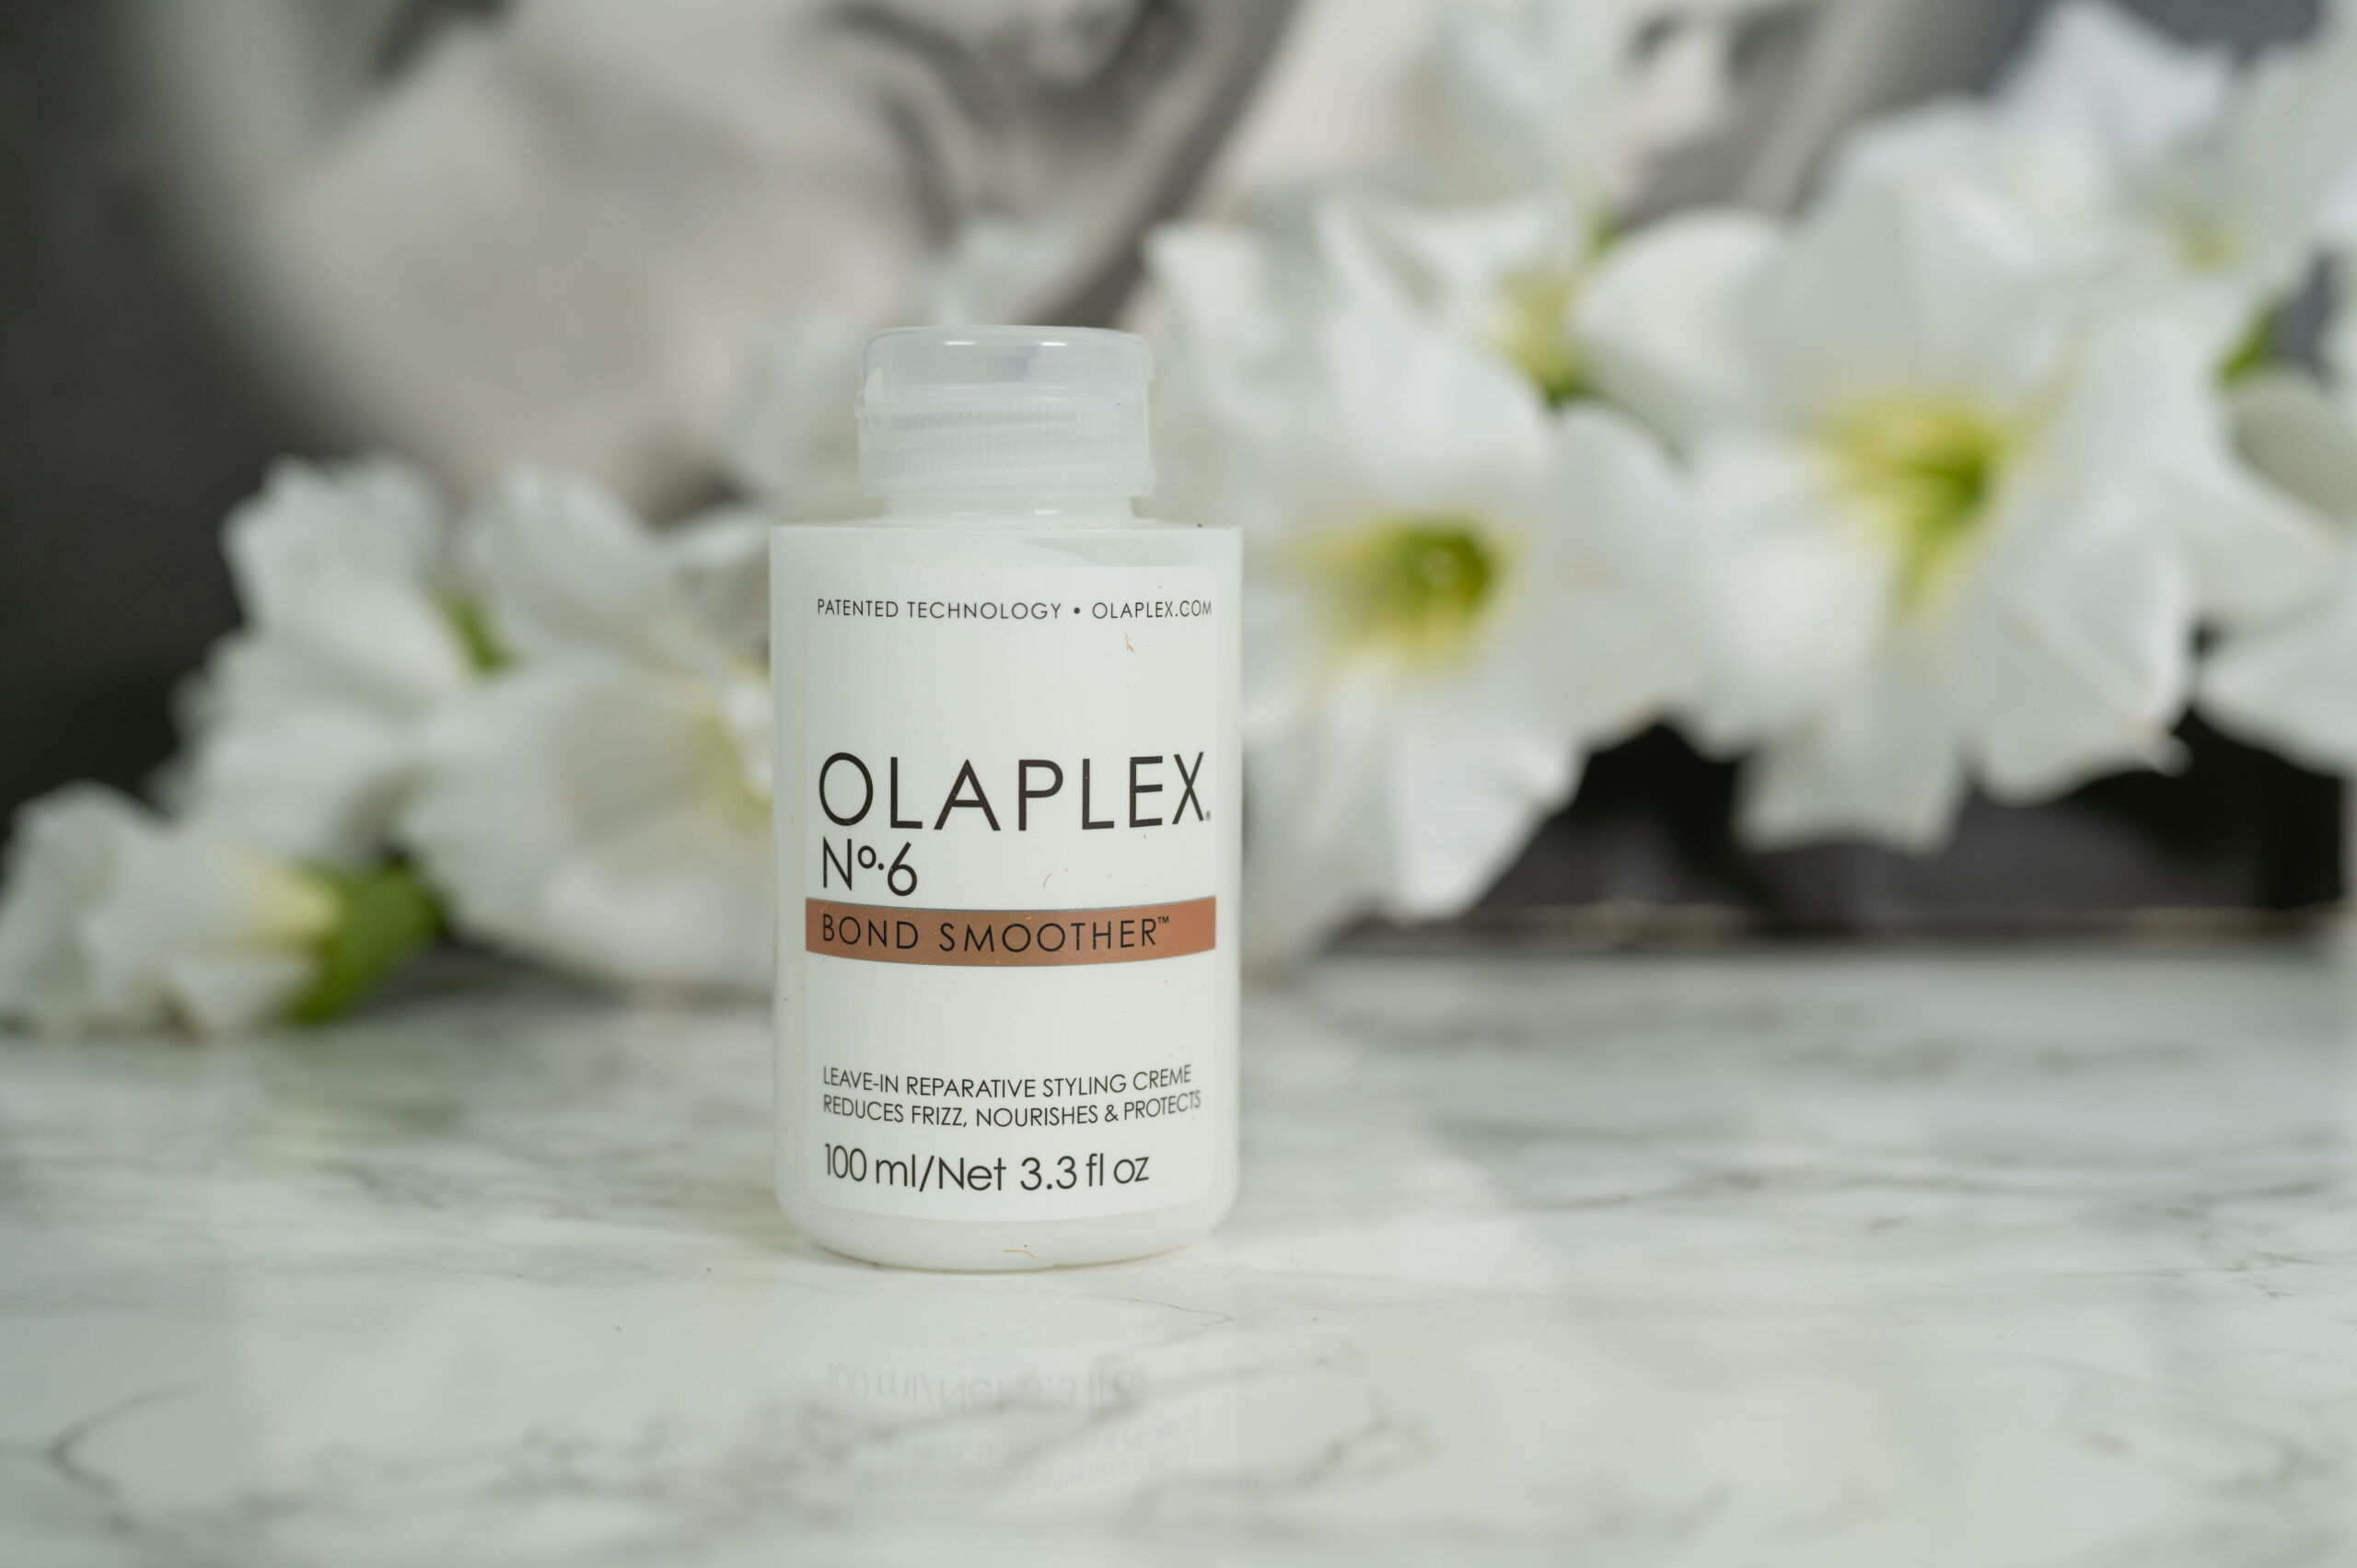 Olaplex No 6 Bond Smoother Reparative Styling Cream